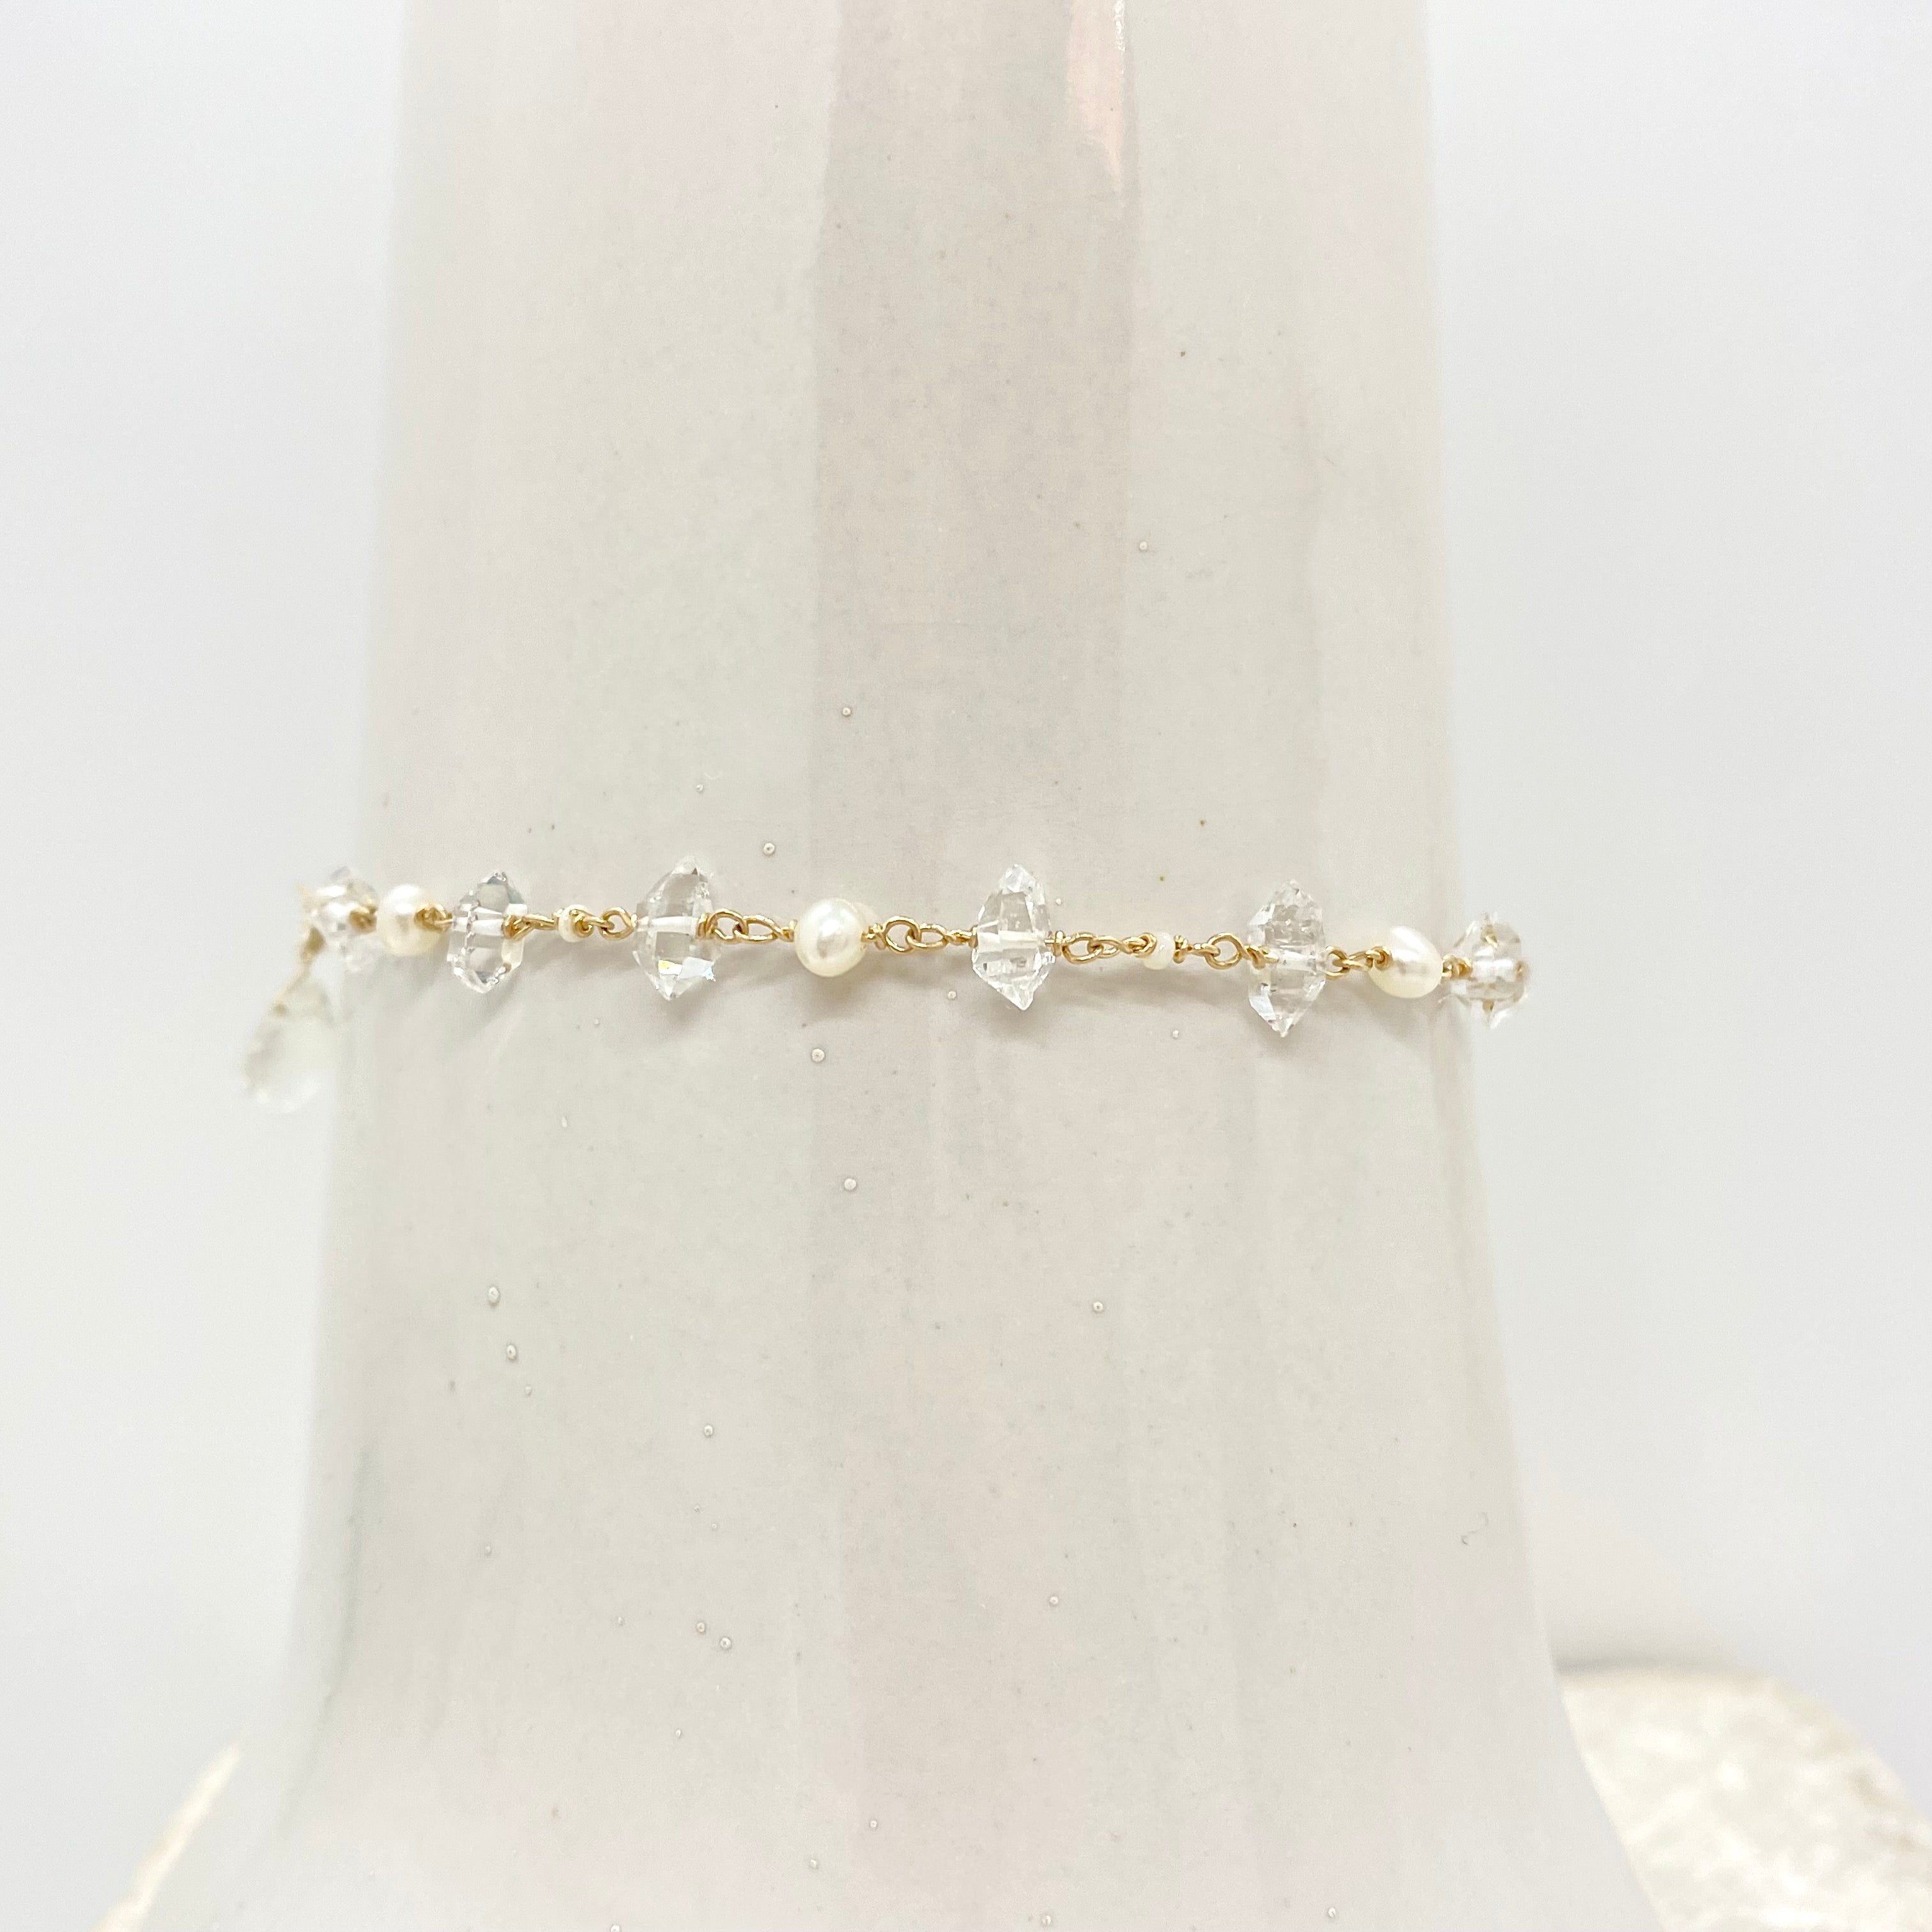 14k Gold Bracelet w/ Freshwater Pearls, Indian Diamonds & Antique Italian Beads